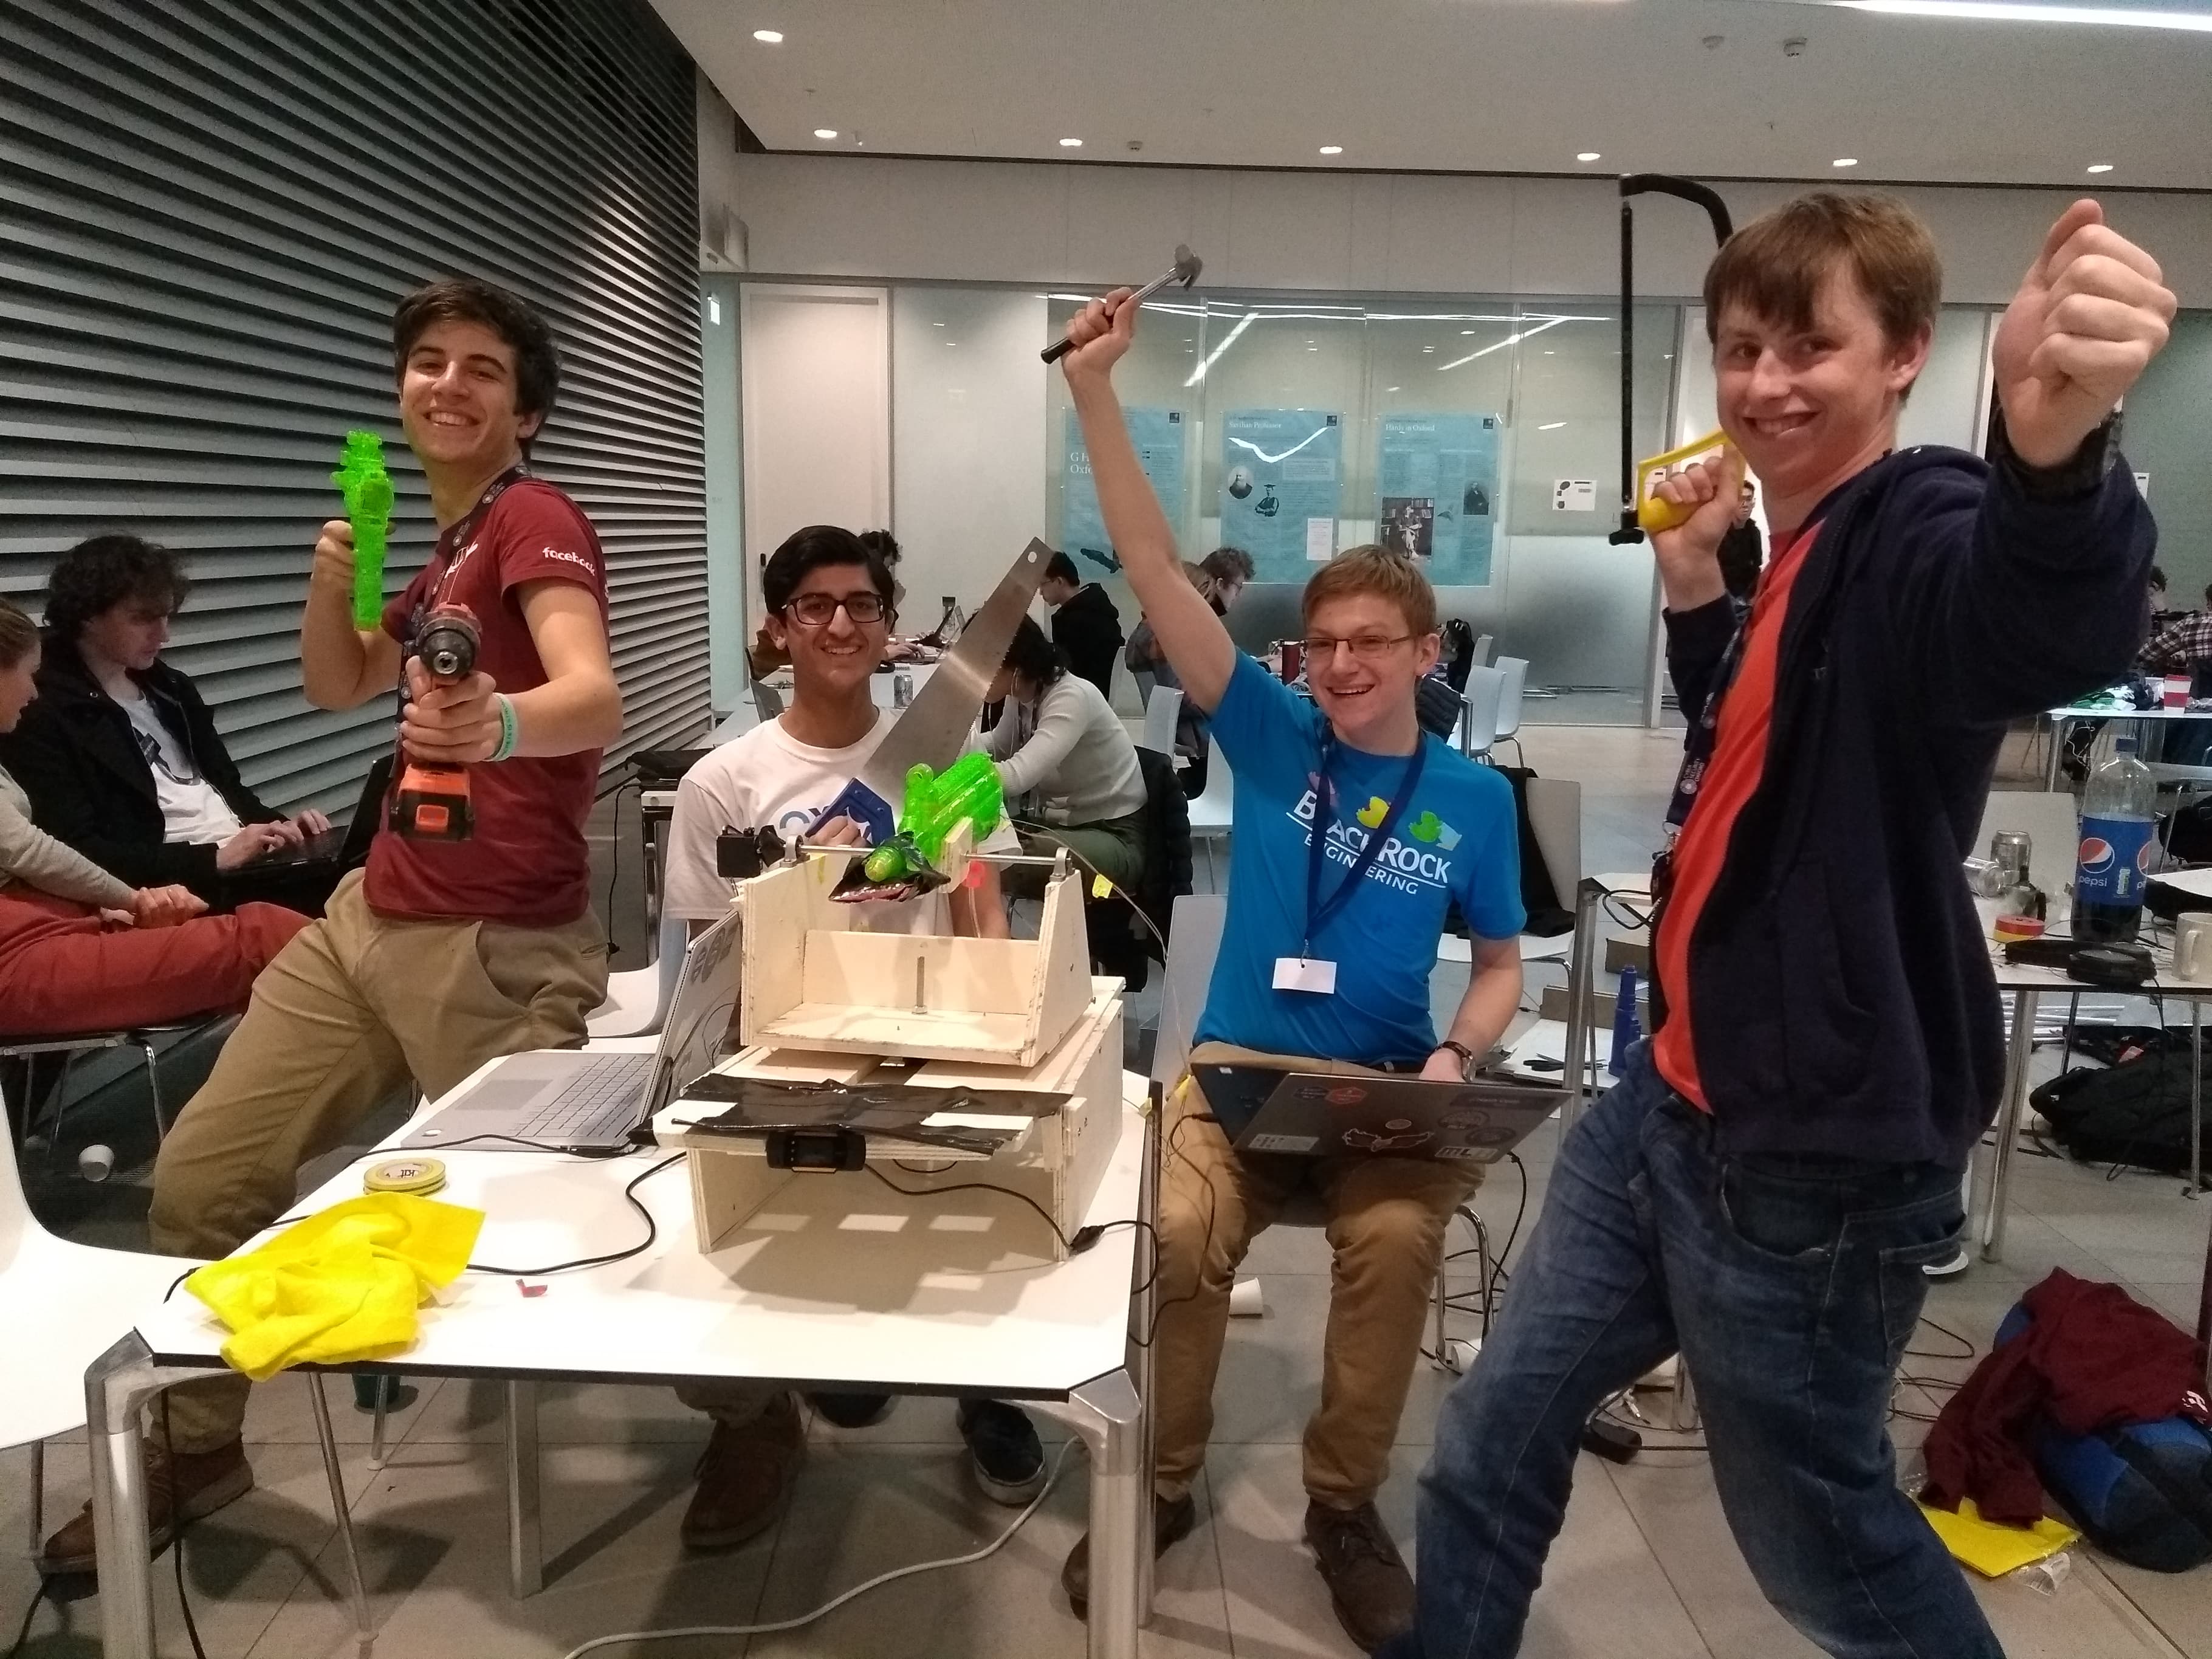 My hackathon team celebrating our latest accomplishment